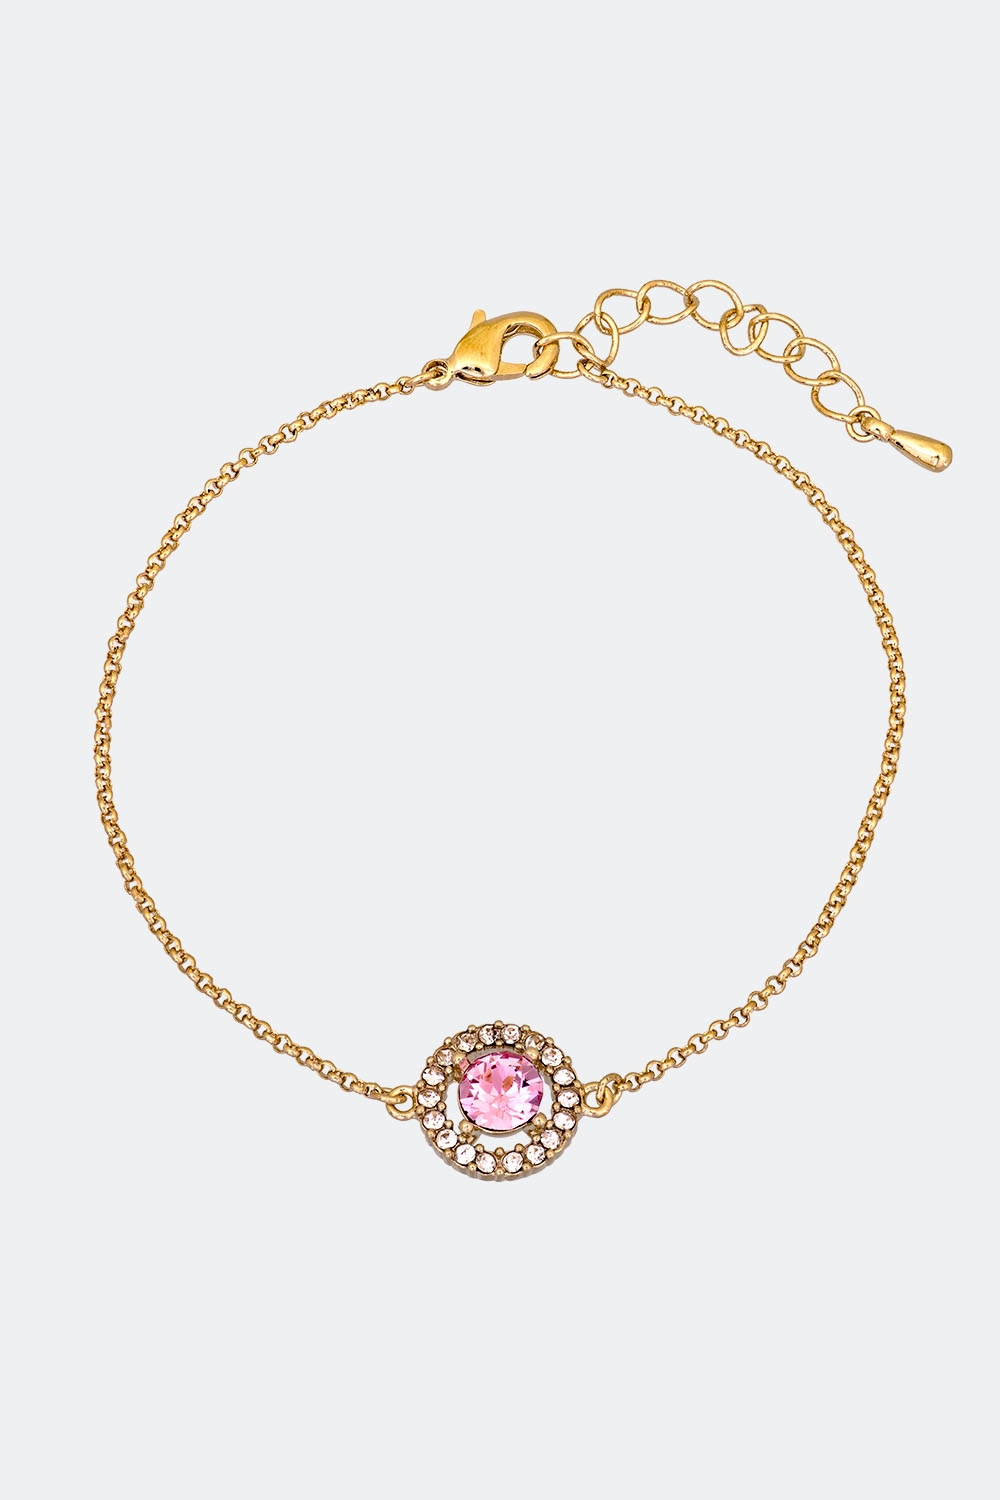 Miss Miranda bracelet - Light rose ryhmässä Lily and Rose - Rannekorut @ Glitter (251000115002)